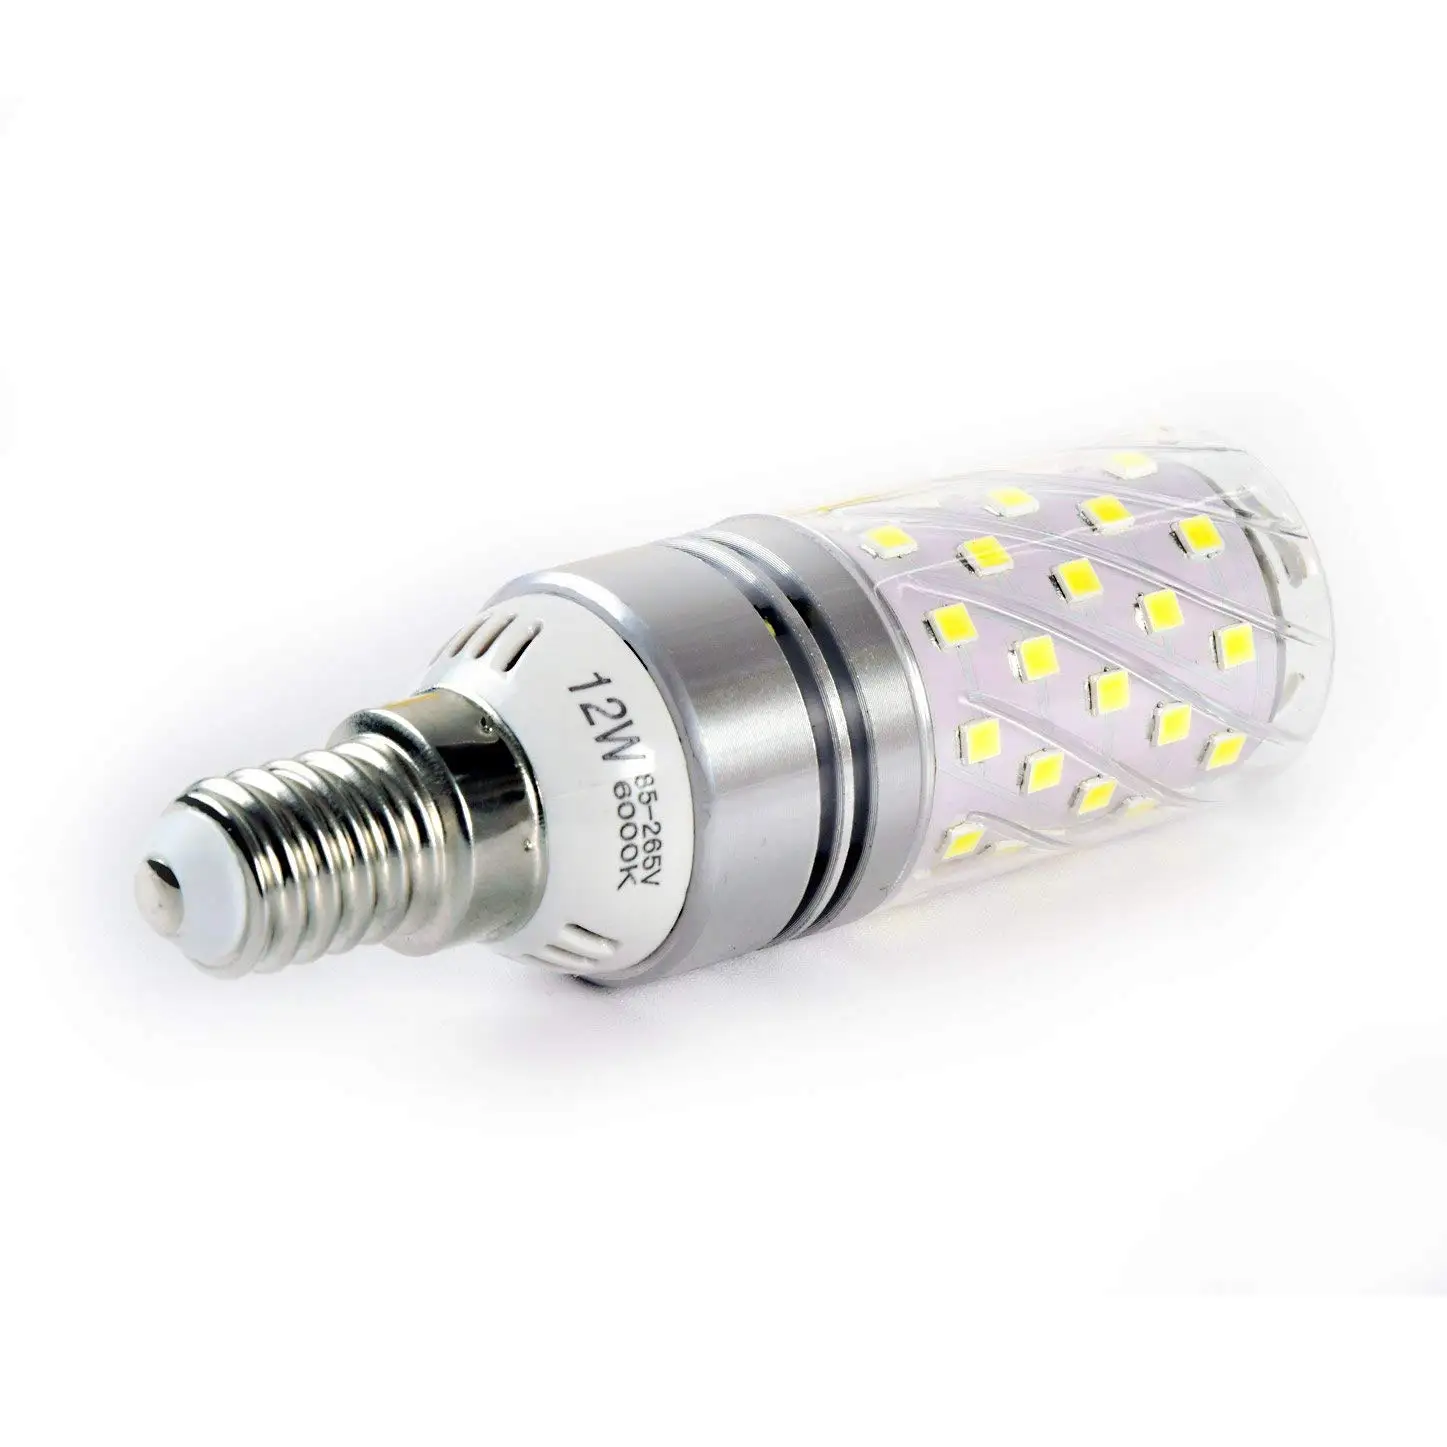 Hzsane LED Corn Bulbs 1200Lm 12W 6000K Daylight White E14 Small Edison Screw